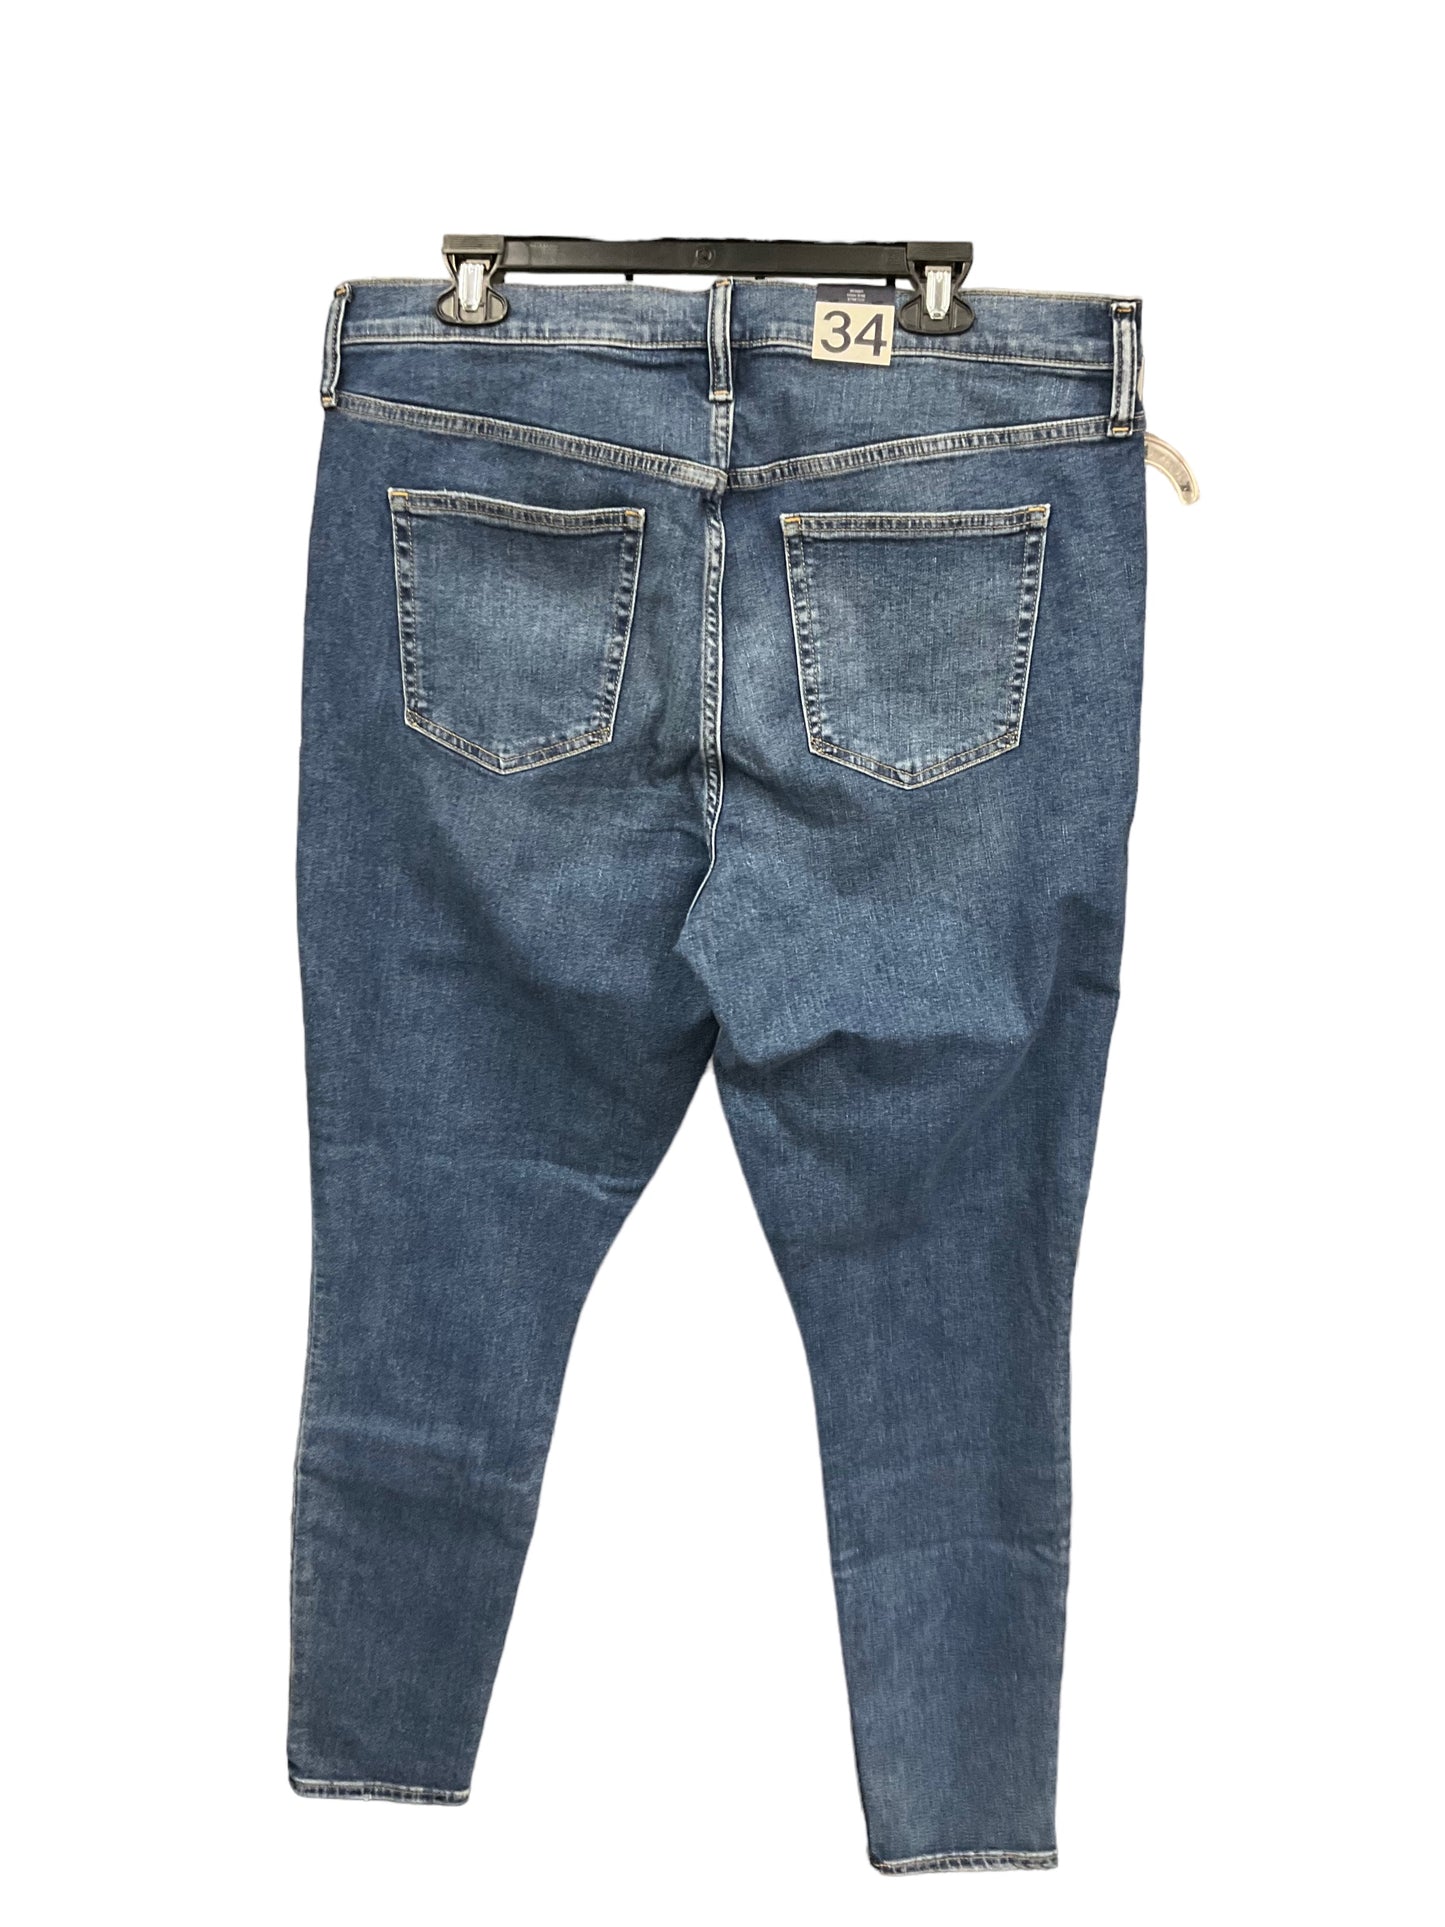 Jeans Skinny By Gap  Size: 34